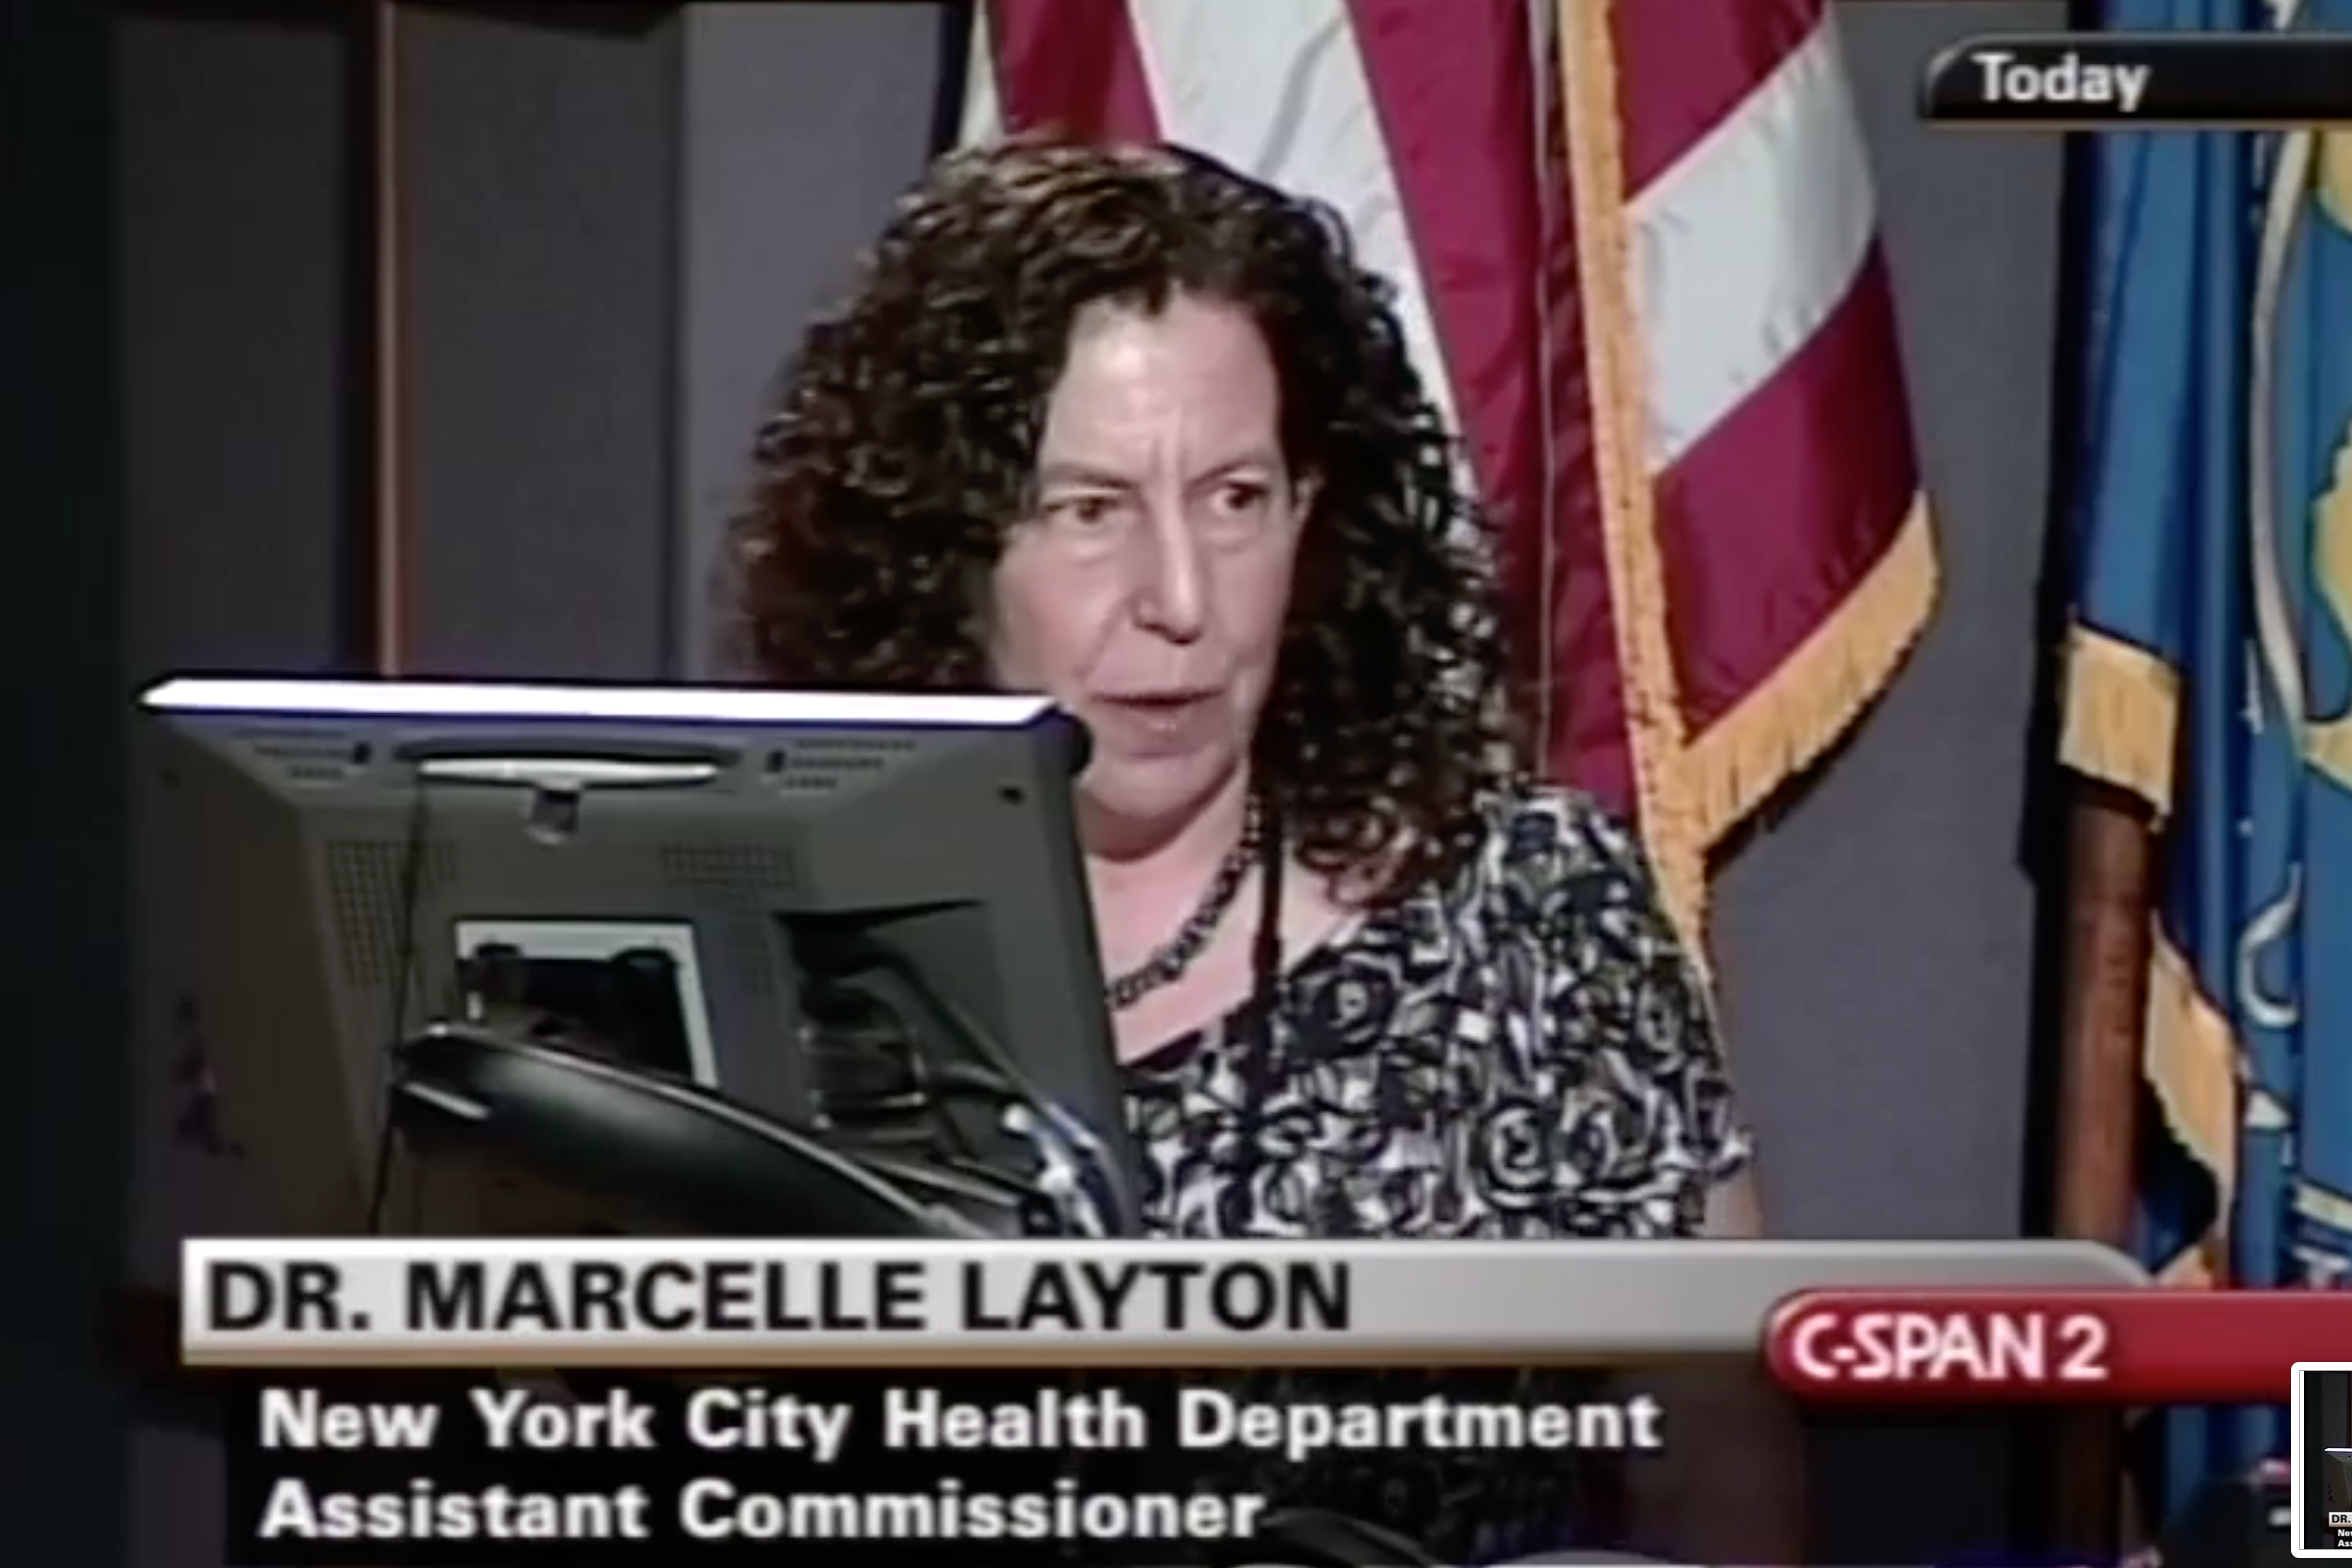 Dr. Marcelle Layton speaks about the Swine Flu in 2009.